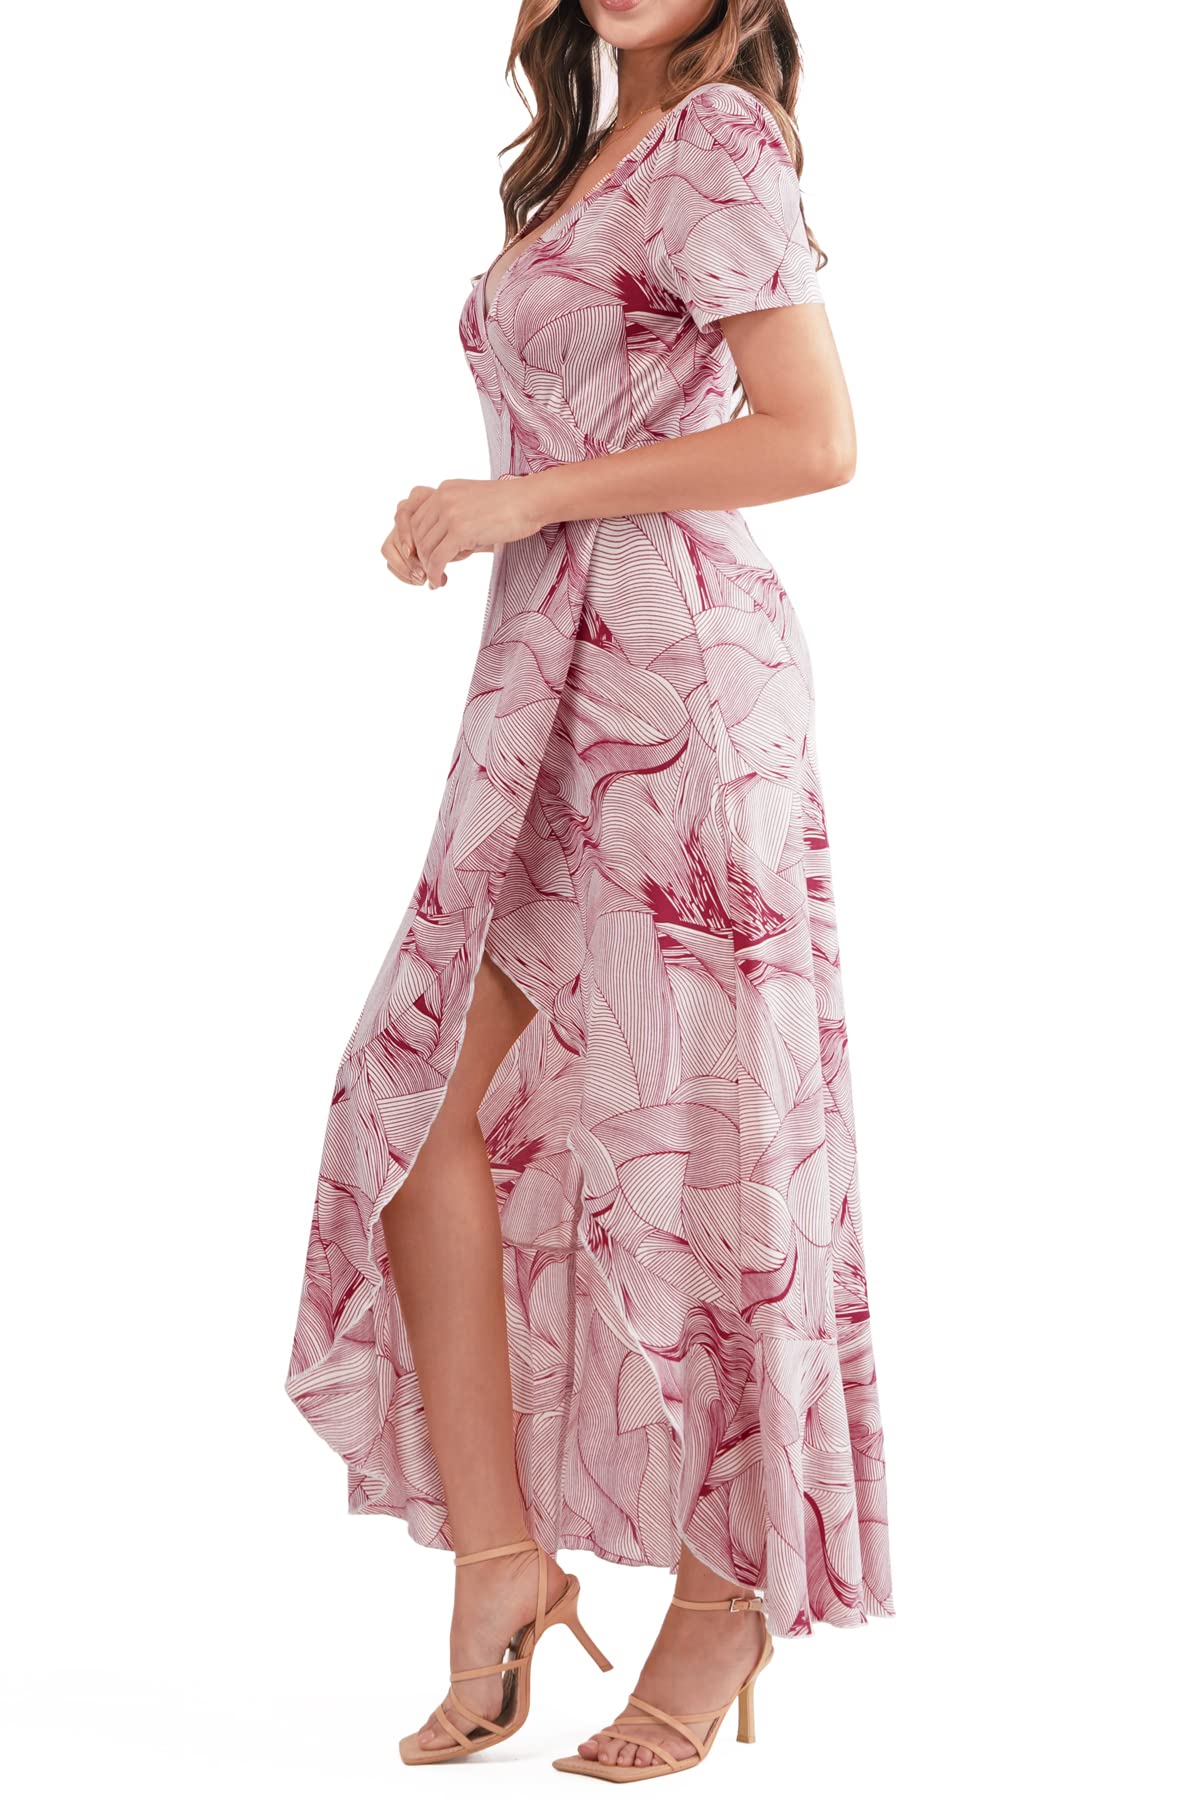 BAISHENGGT Womens Summer Short Sleeve Wrap V Neck Dress Pink Floral Print Ruffle Hem Bohemian Flowy Long Maxi Dresses